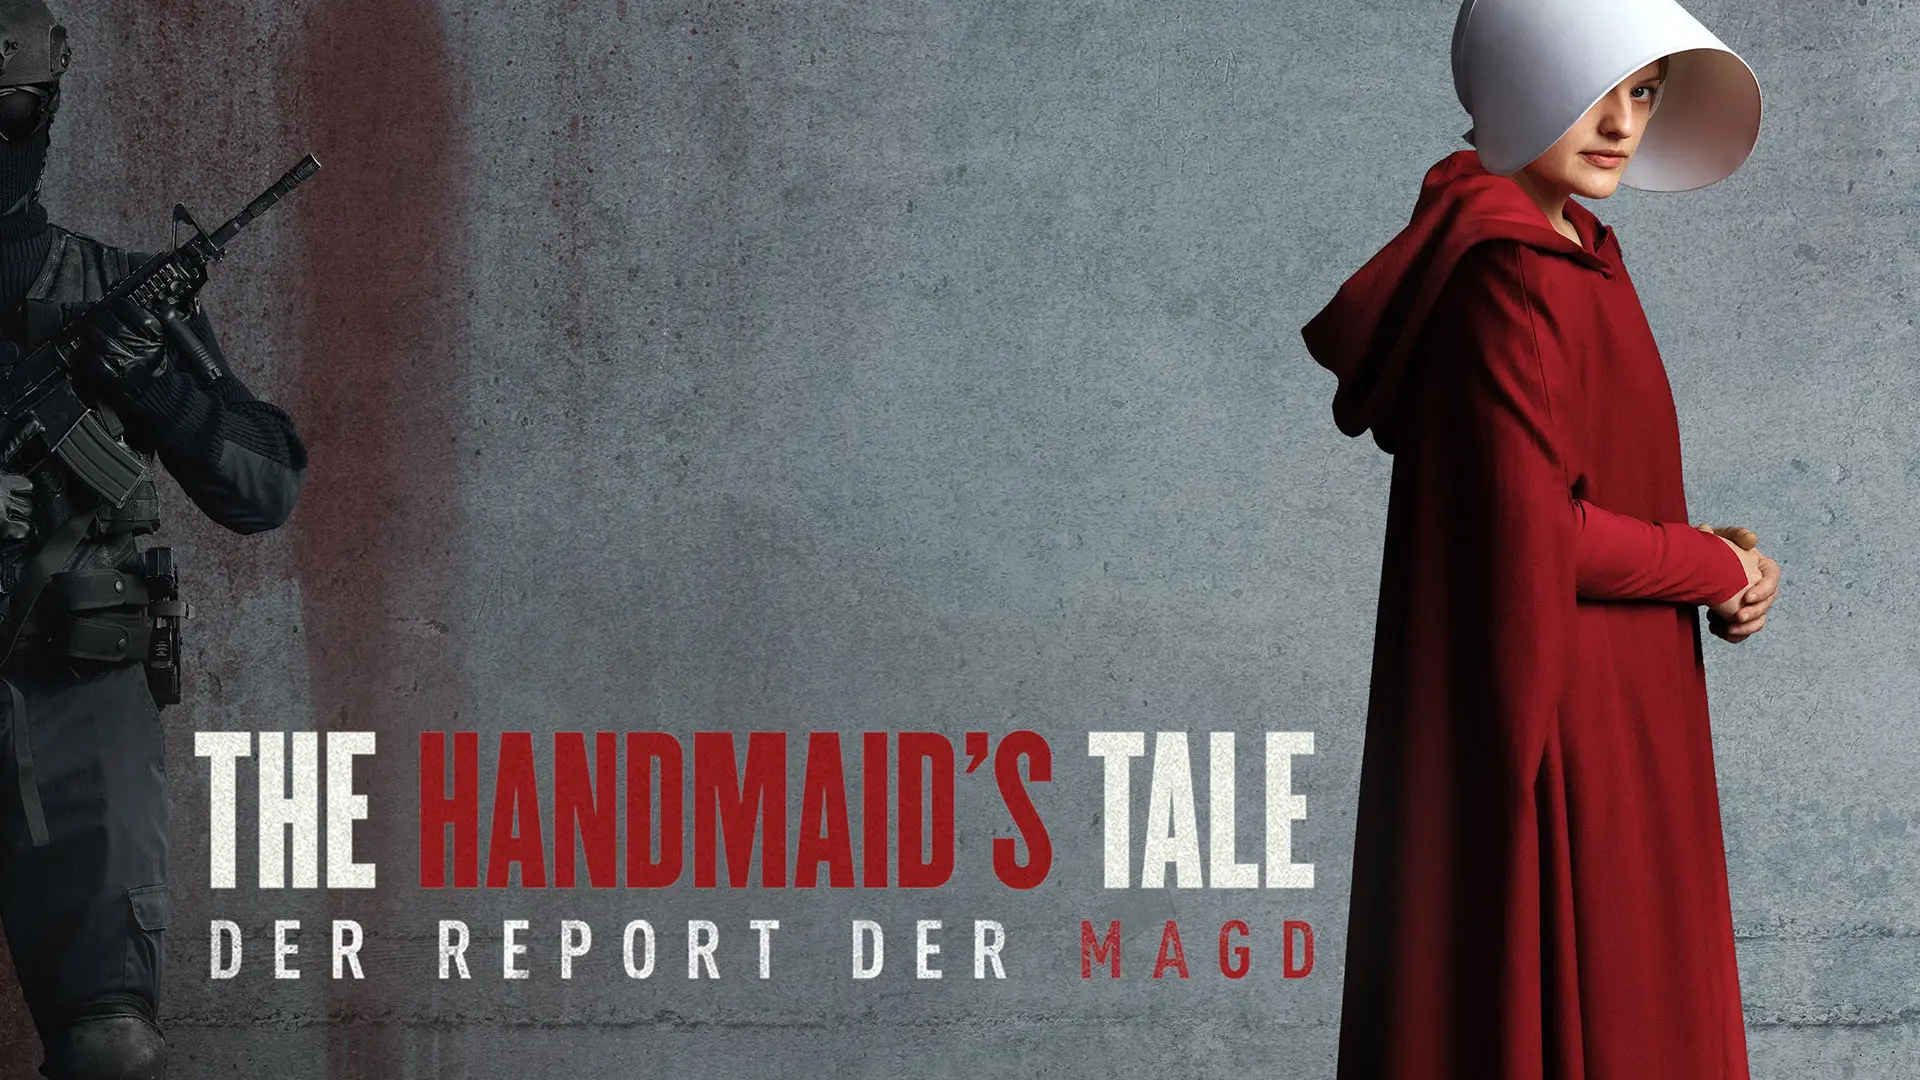 Amazon.de: The Handmaid's Tale: Der Report der Magd - Staffel 1 [dt./OV]  ansehen | Prime Video